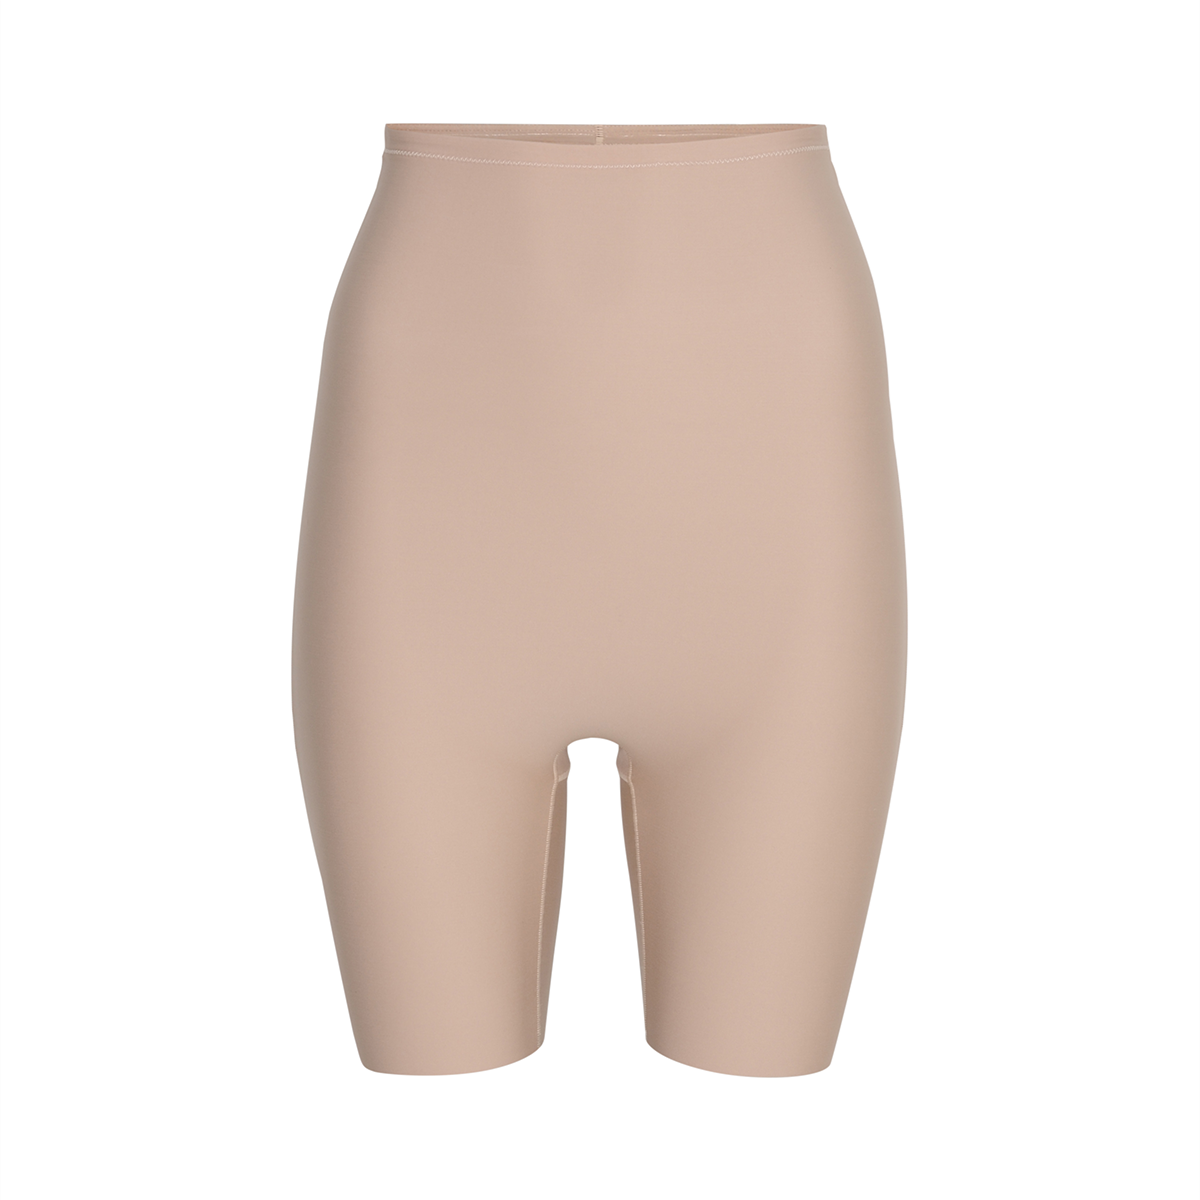 Decoy Shapewear Shorts, Farbe: Sand, Größe: L, Damen von Decoy